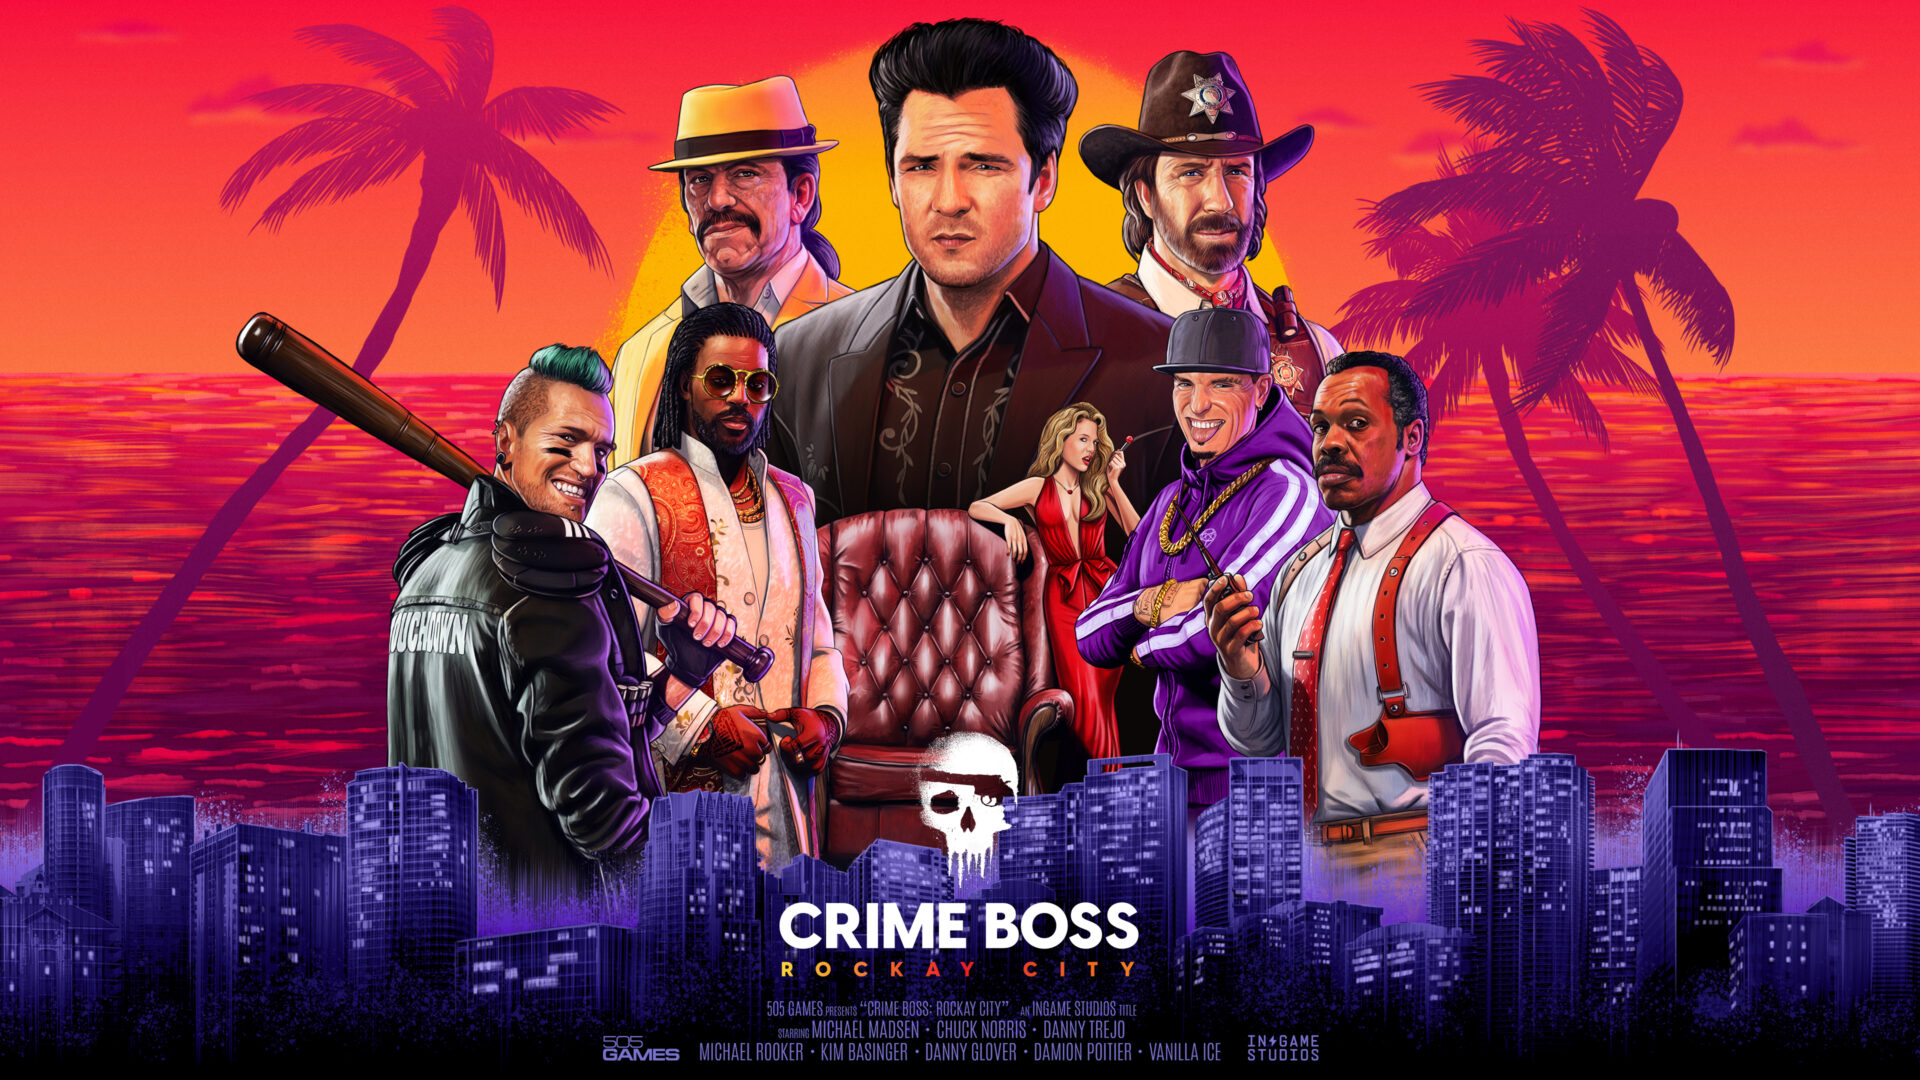 crime boss rockay city review